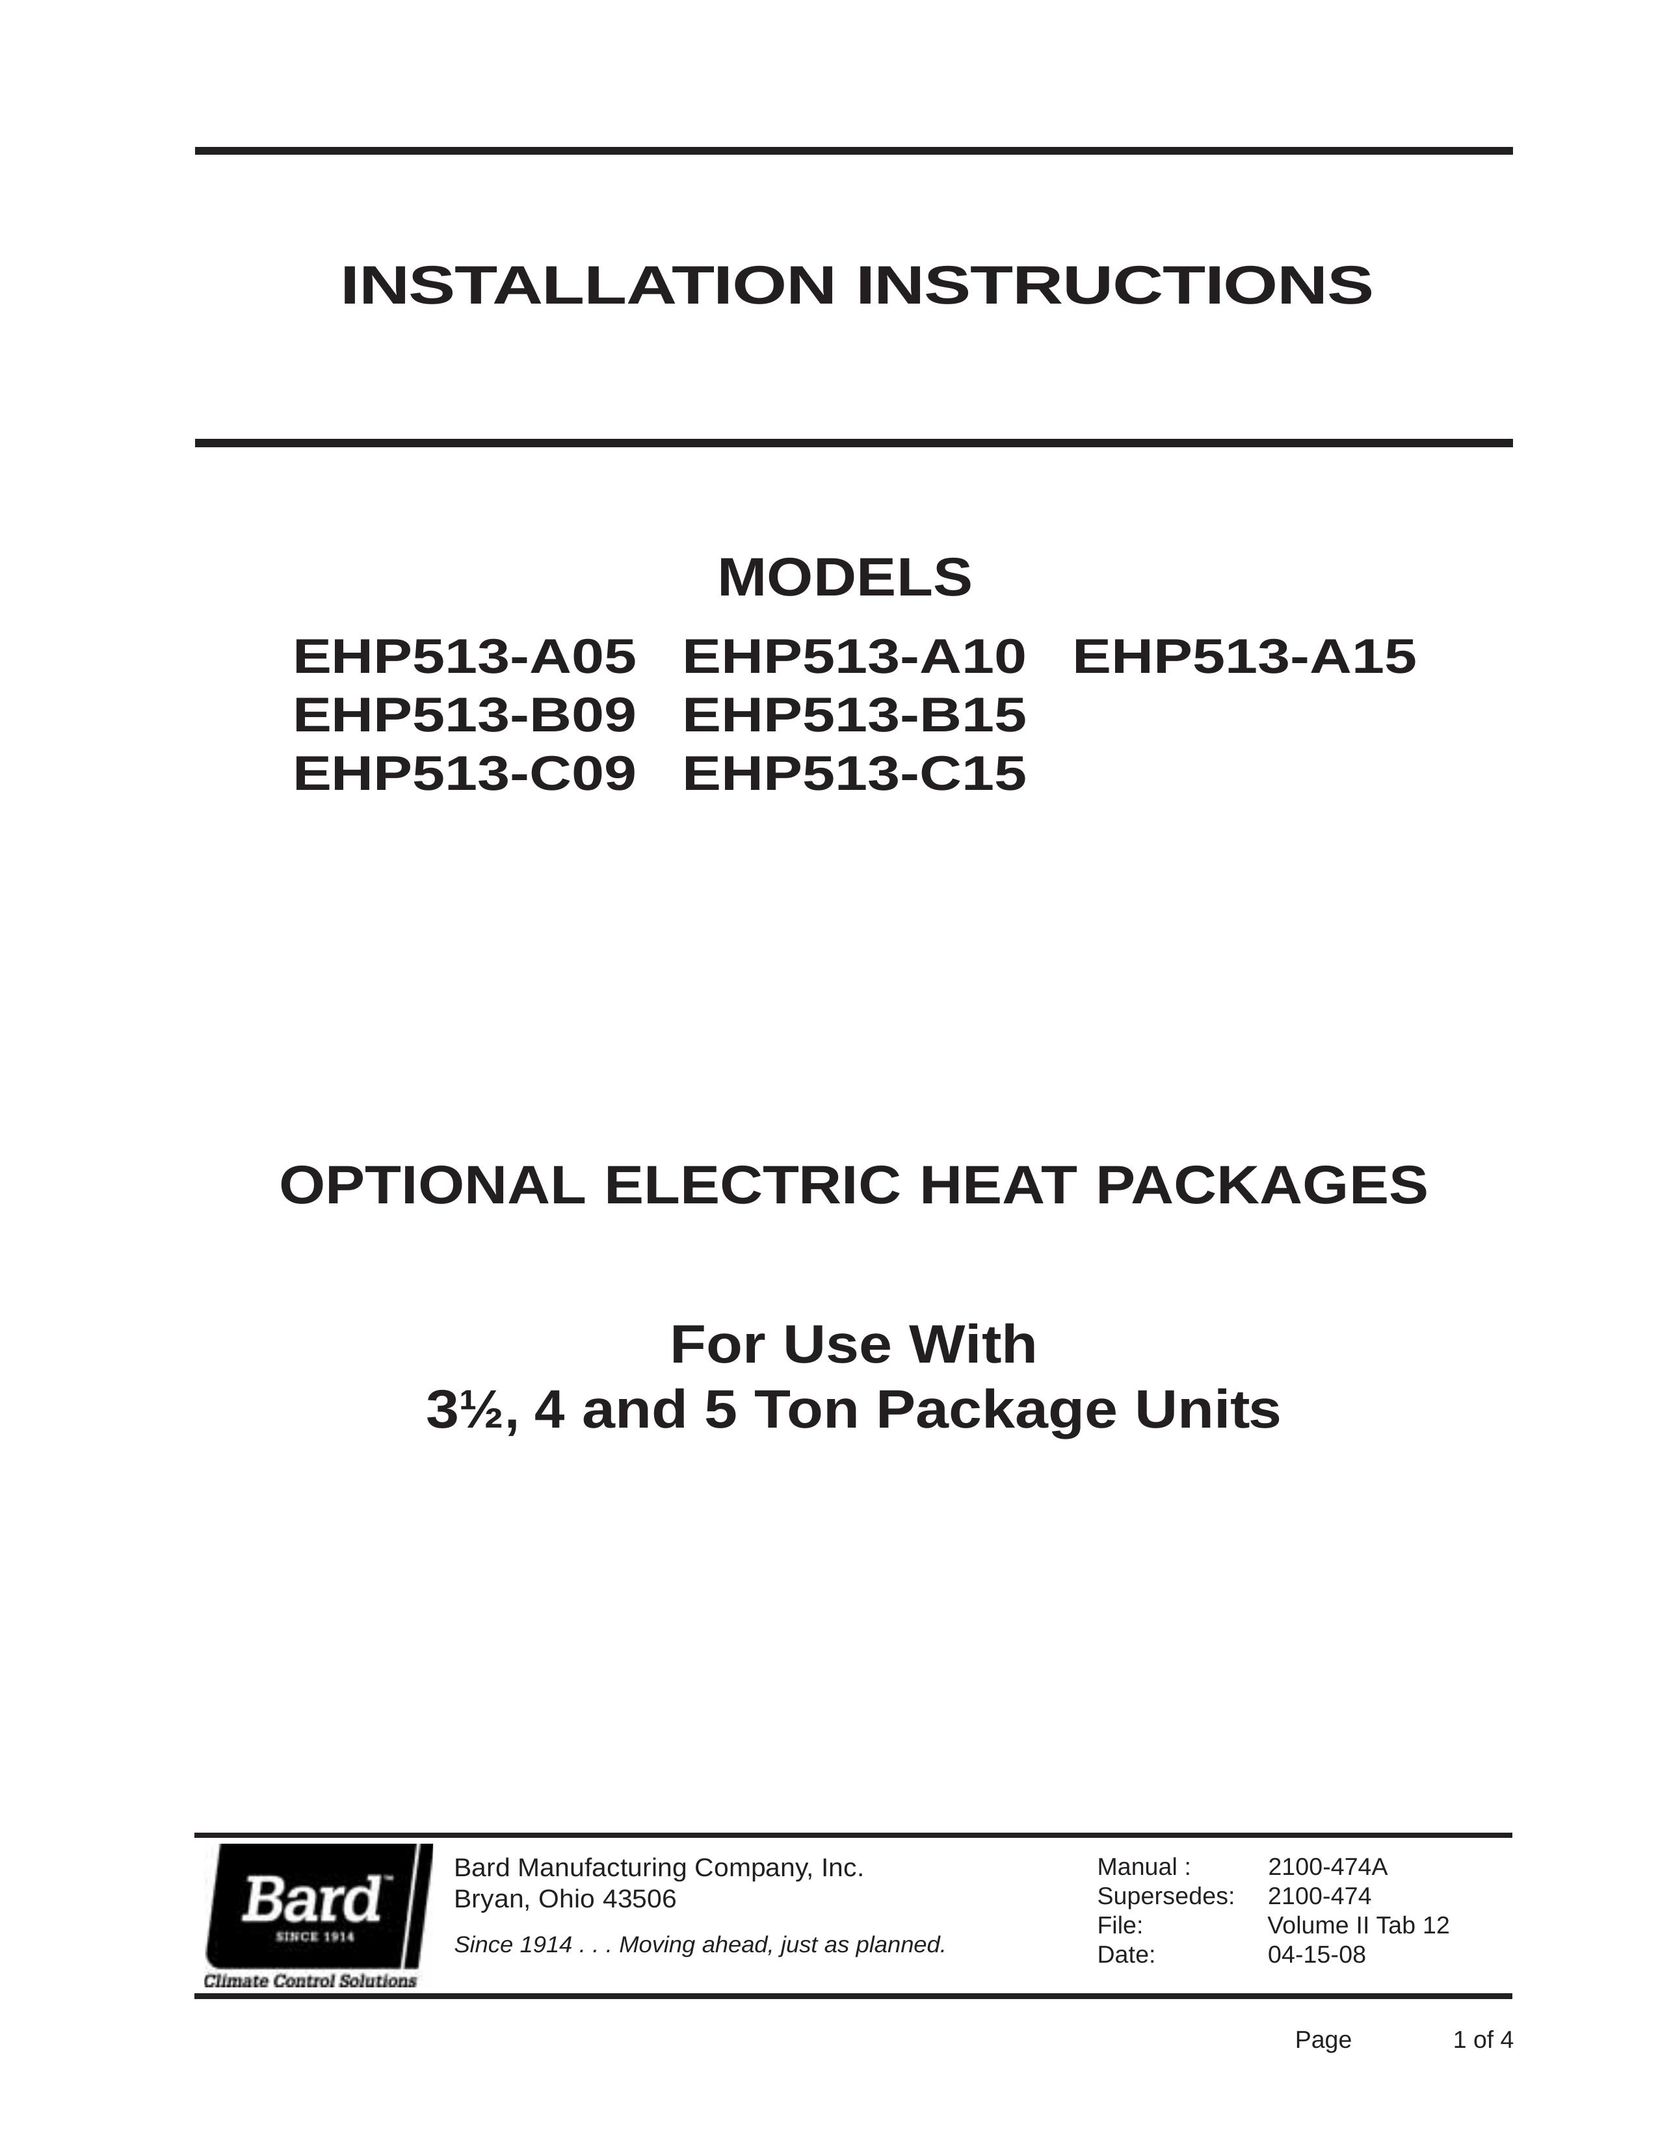 Bard EHP513-C09 Heating System User Manual